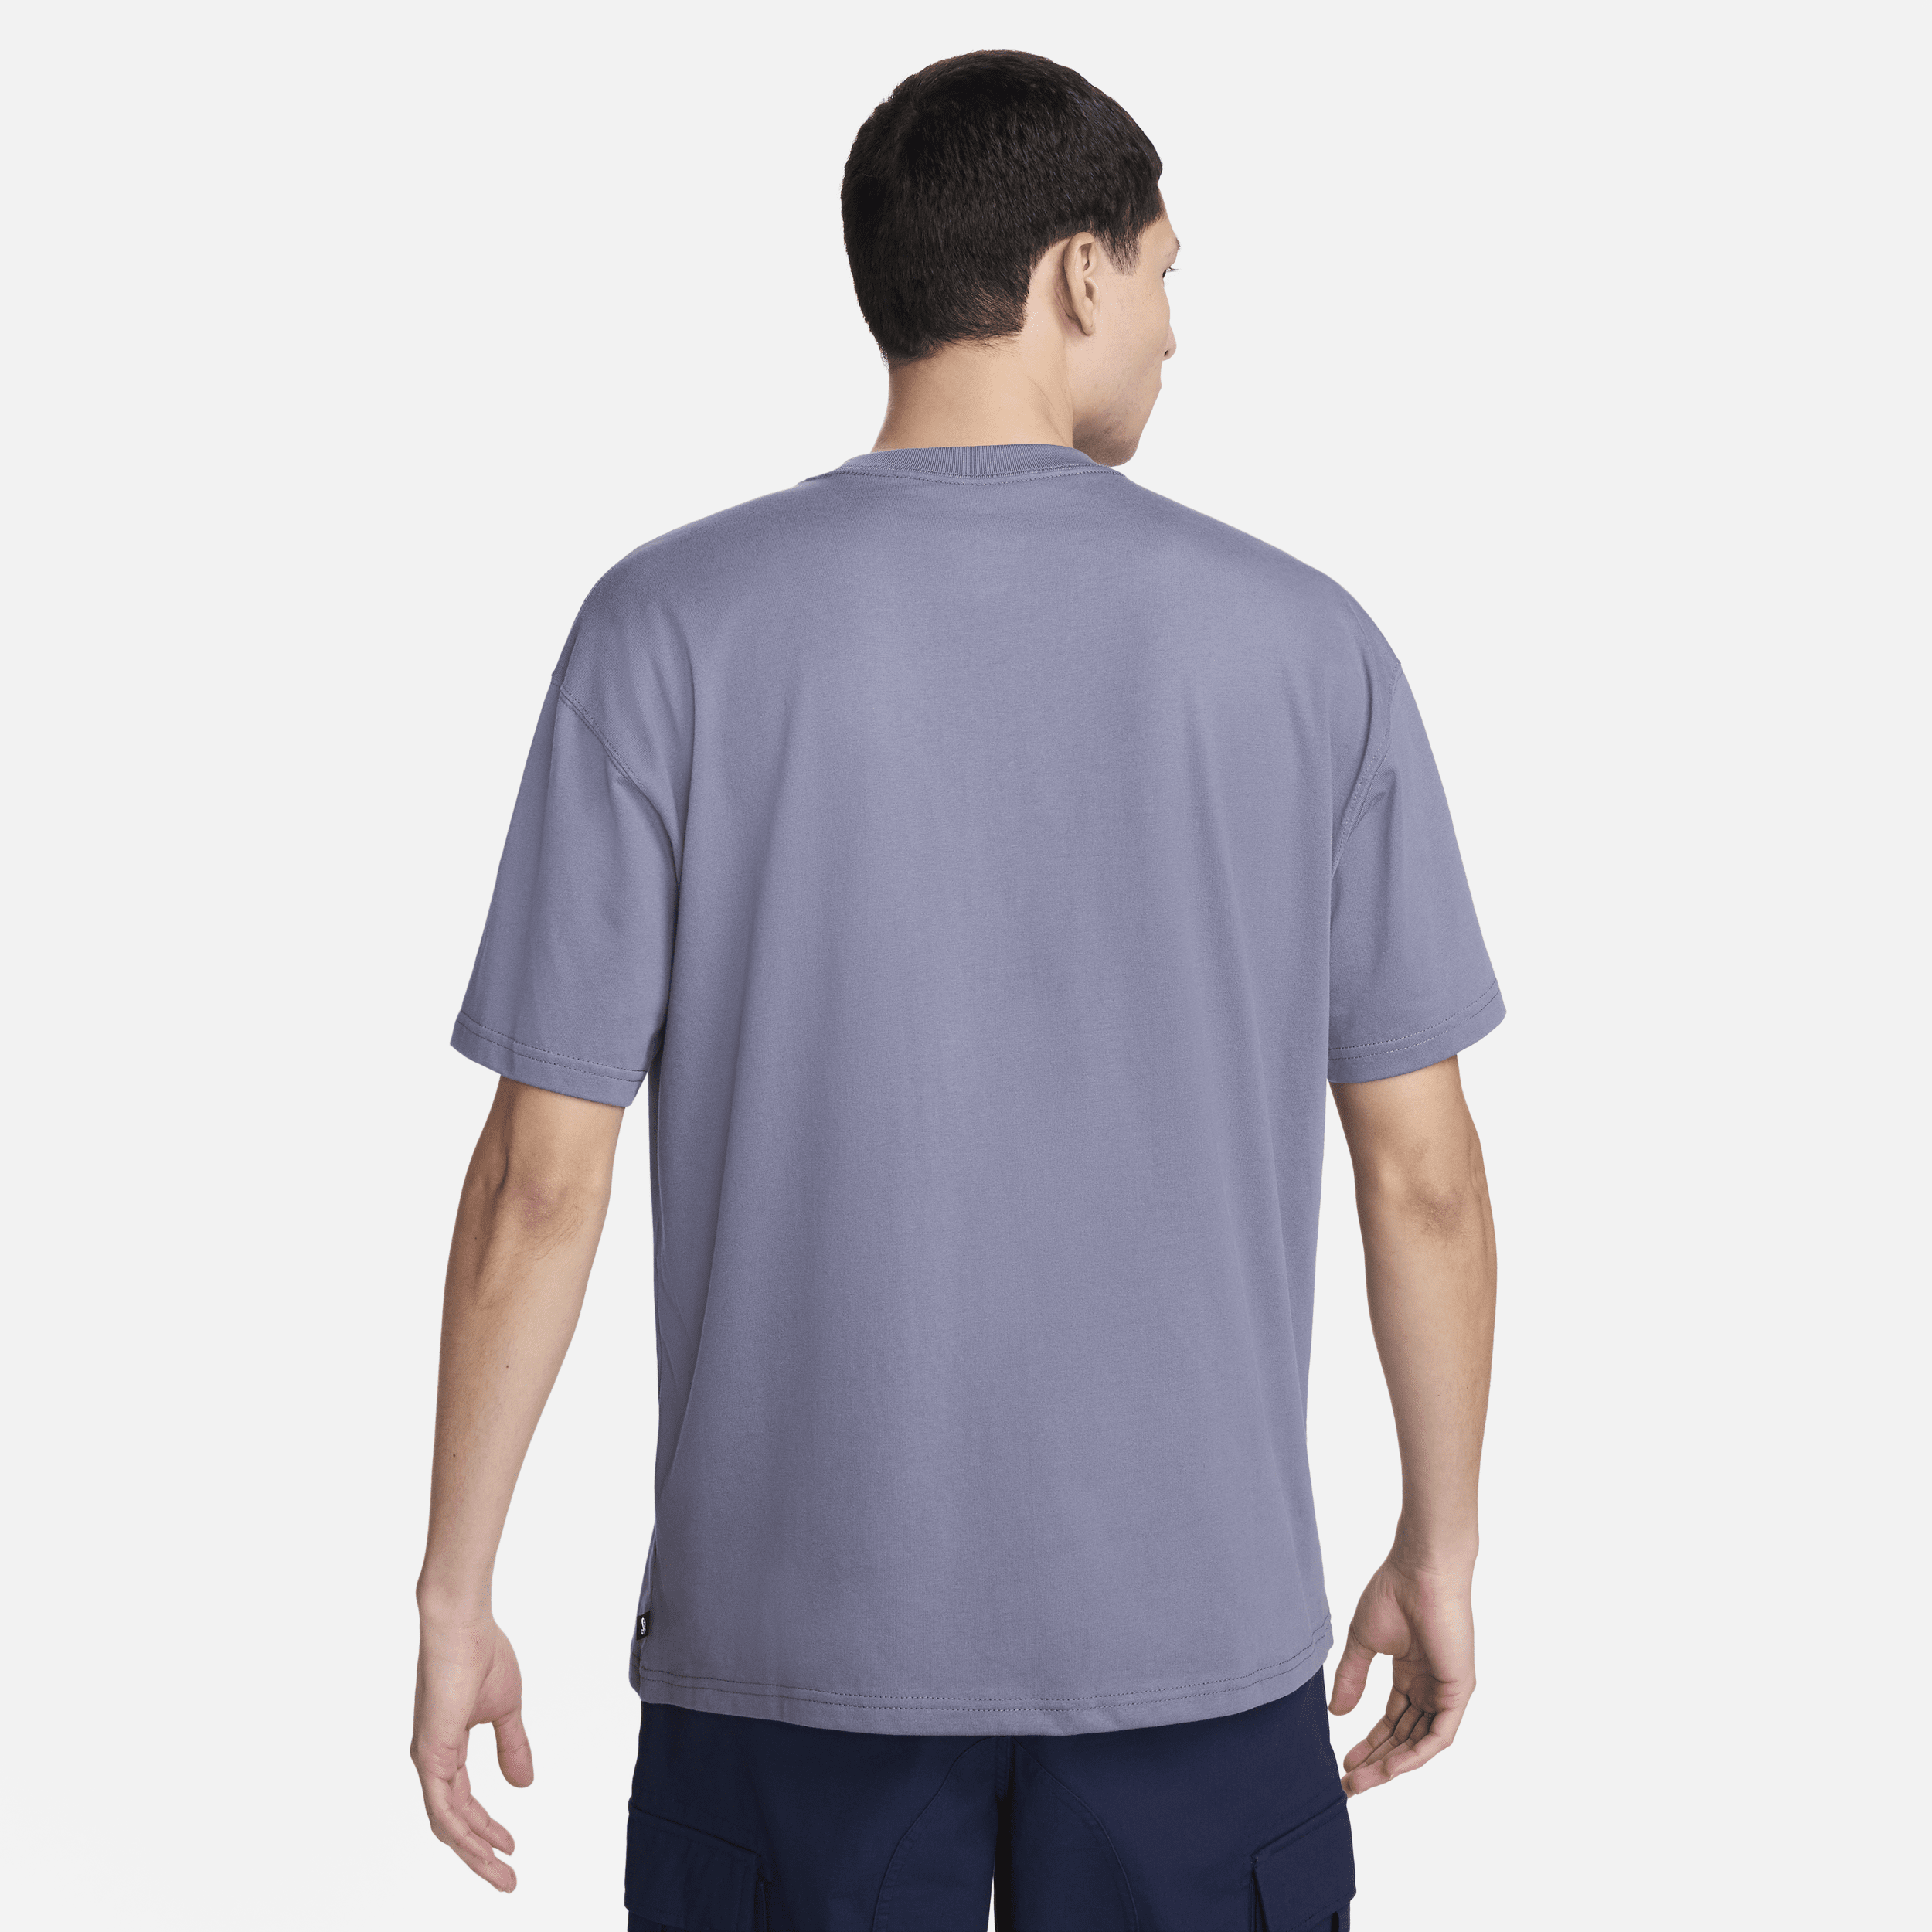 Nike SB Skateshirt met logo Grijs